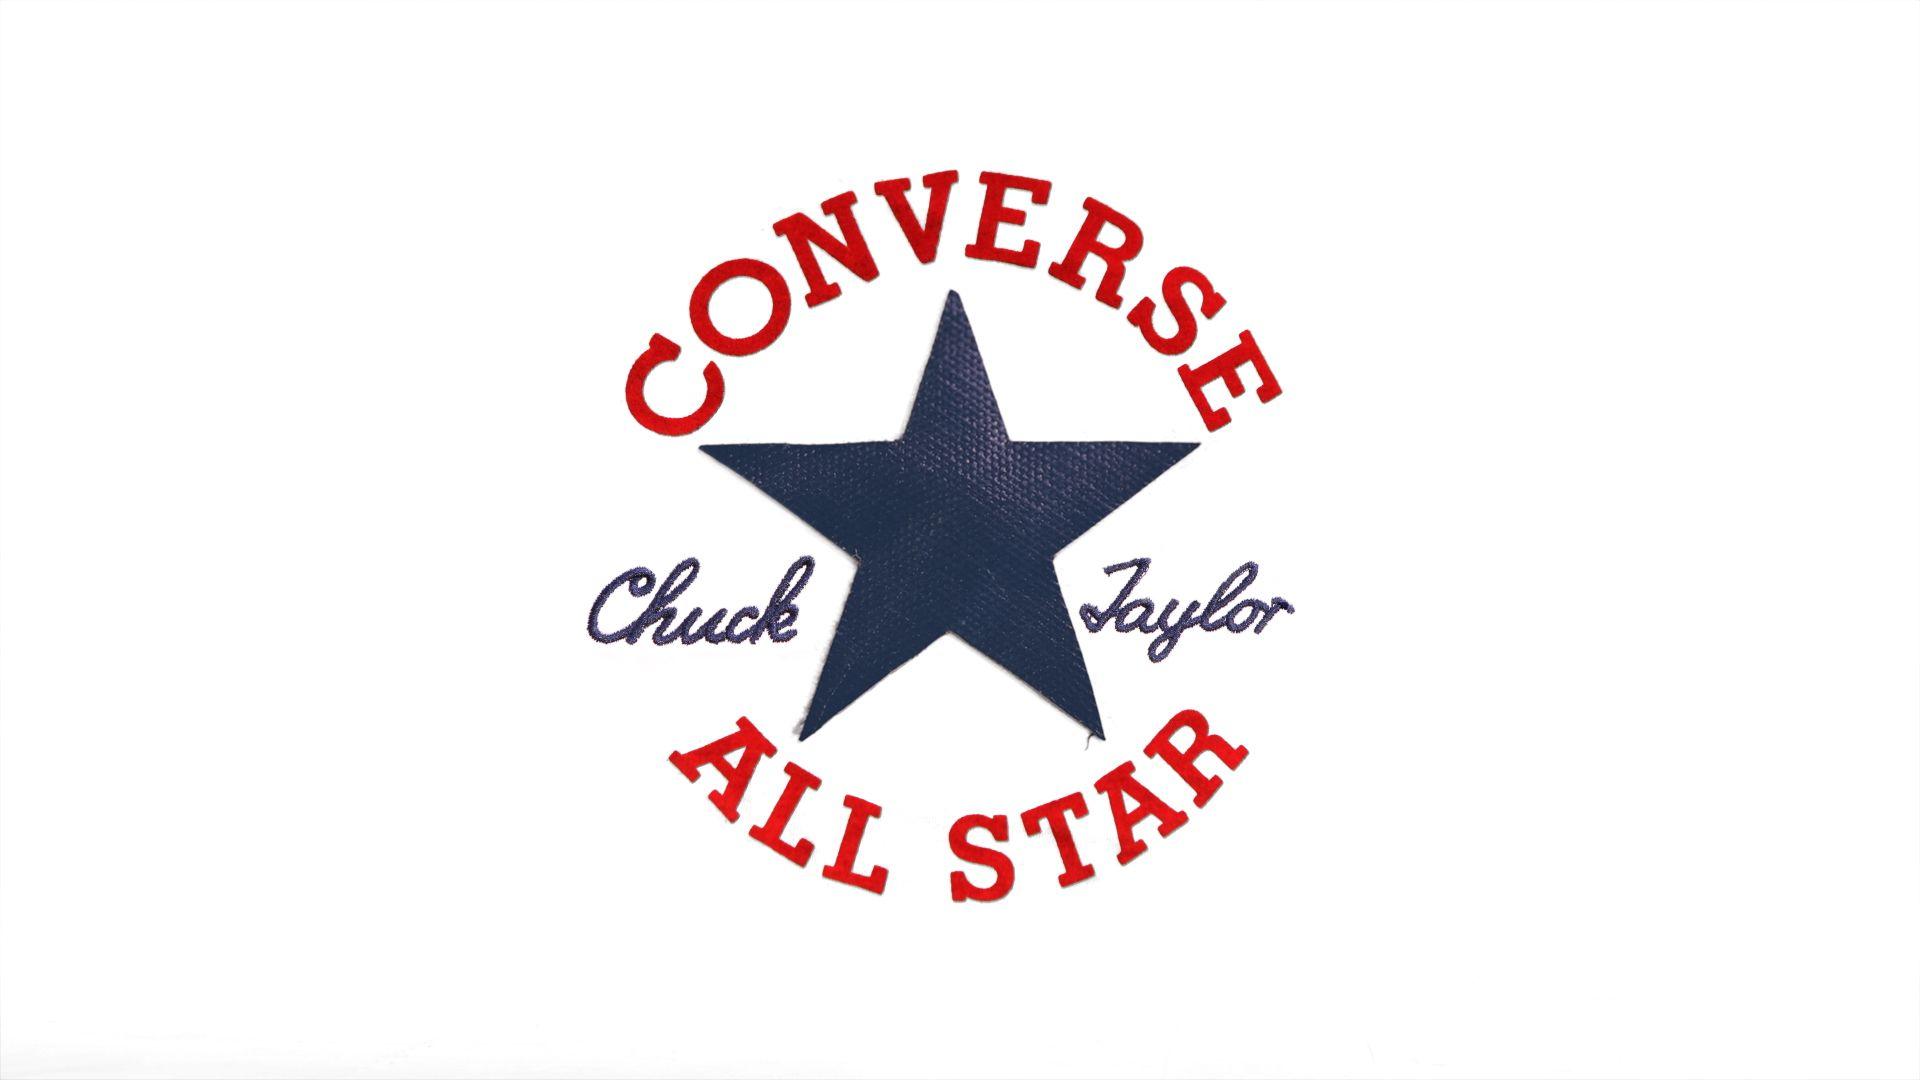 Converse Chuck Taylor Logo Wallpaper 61765 1920x1080 px